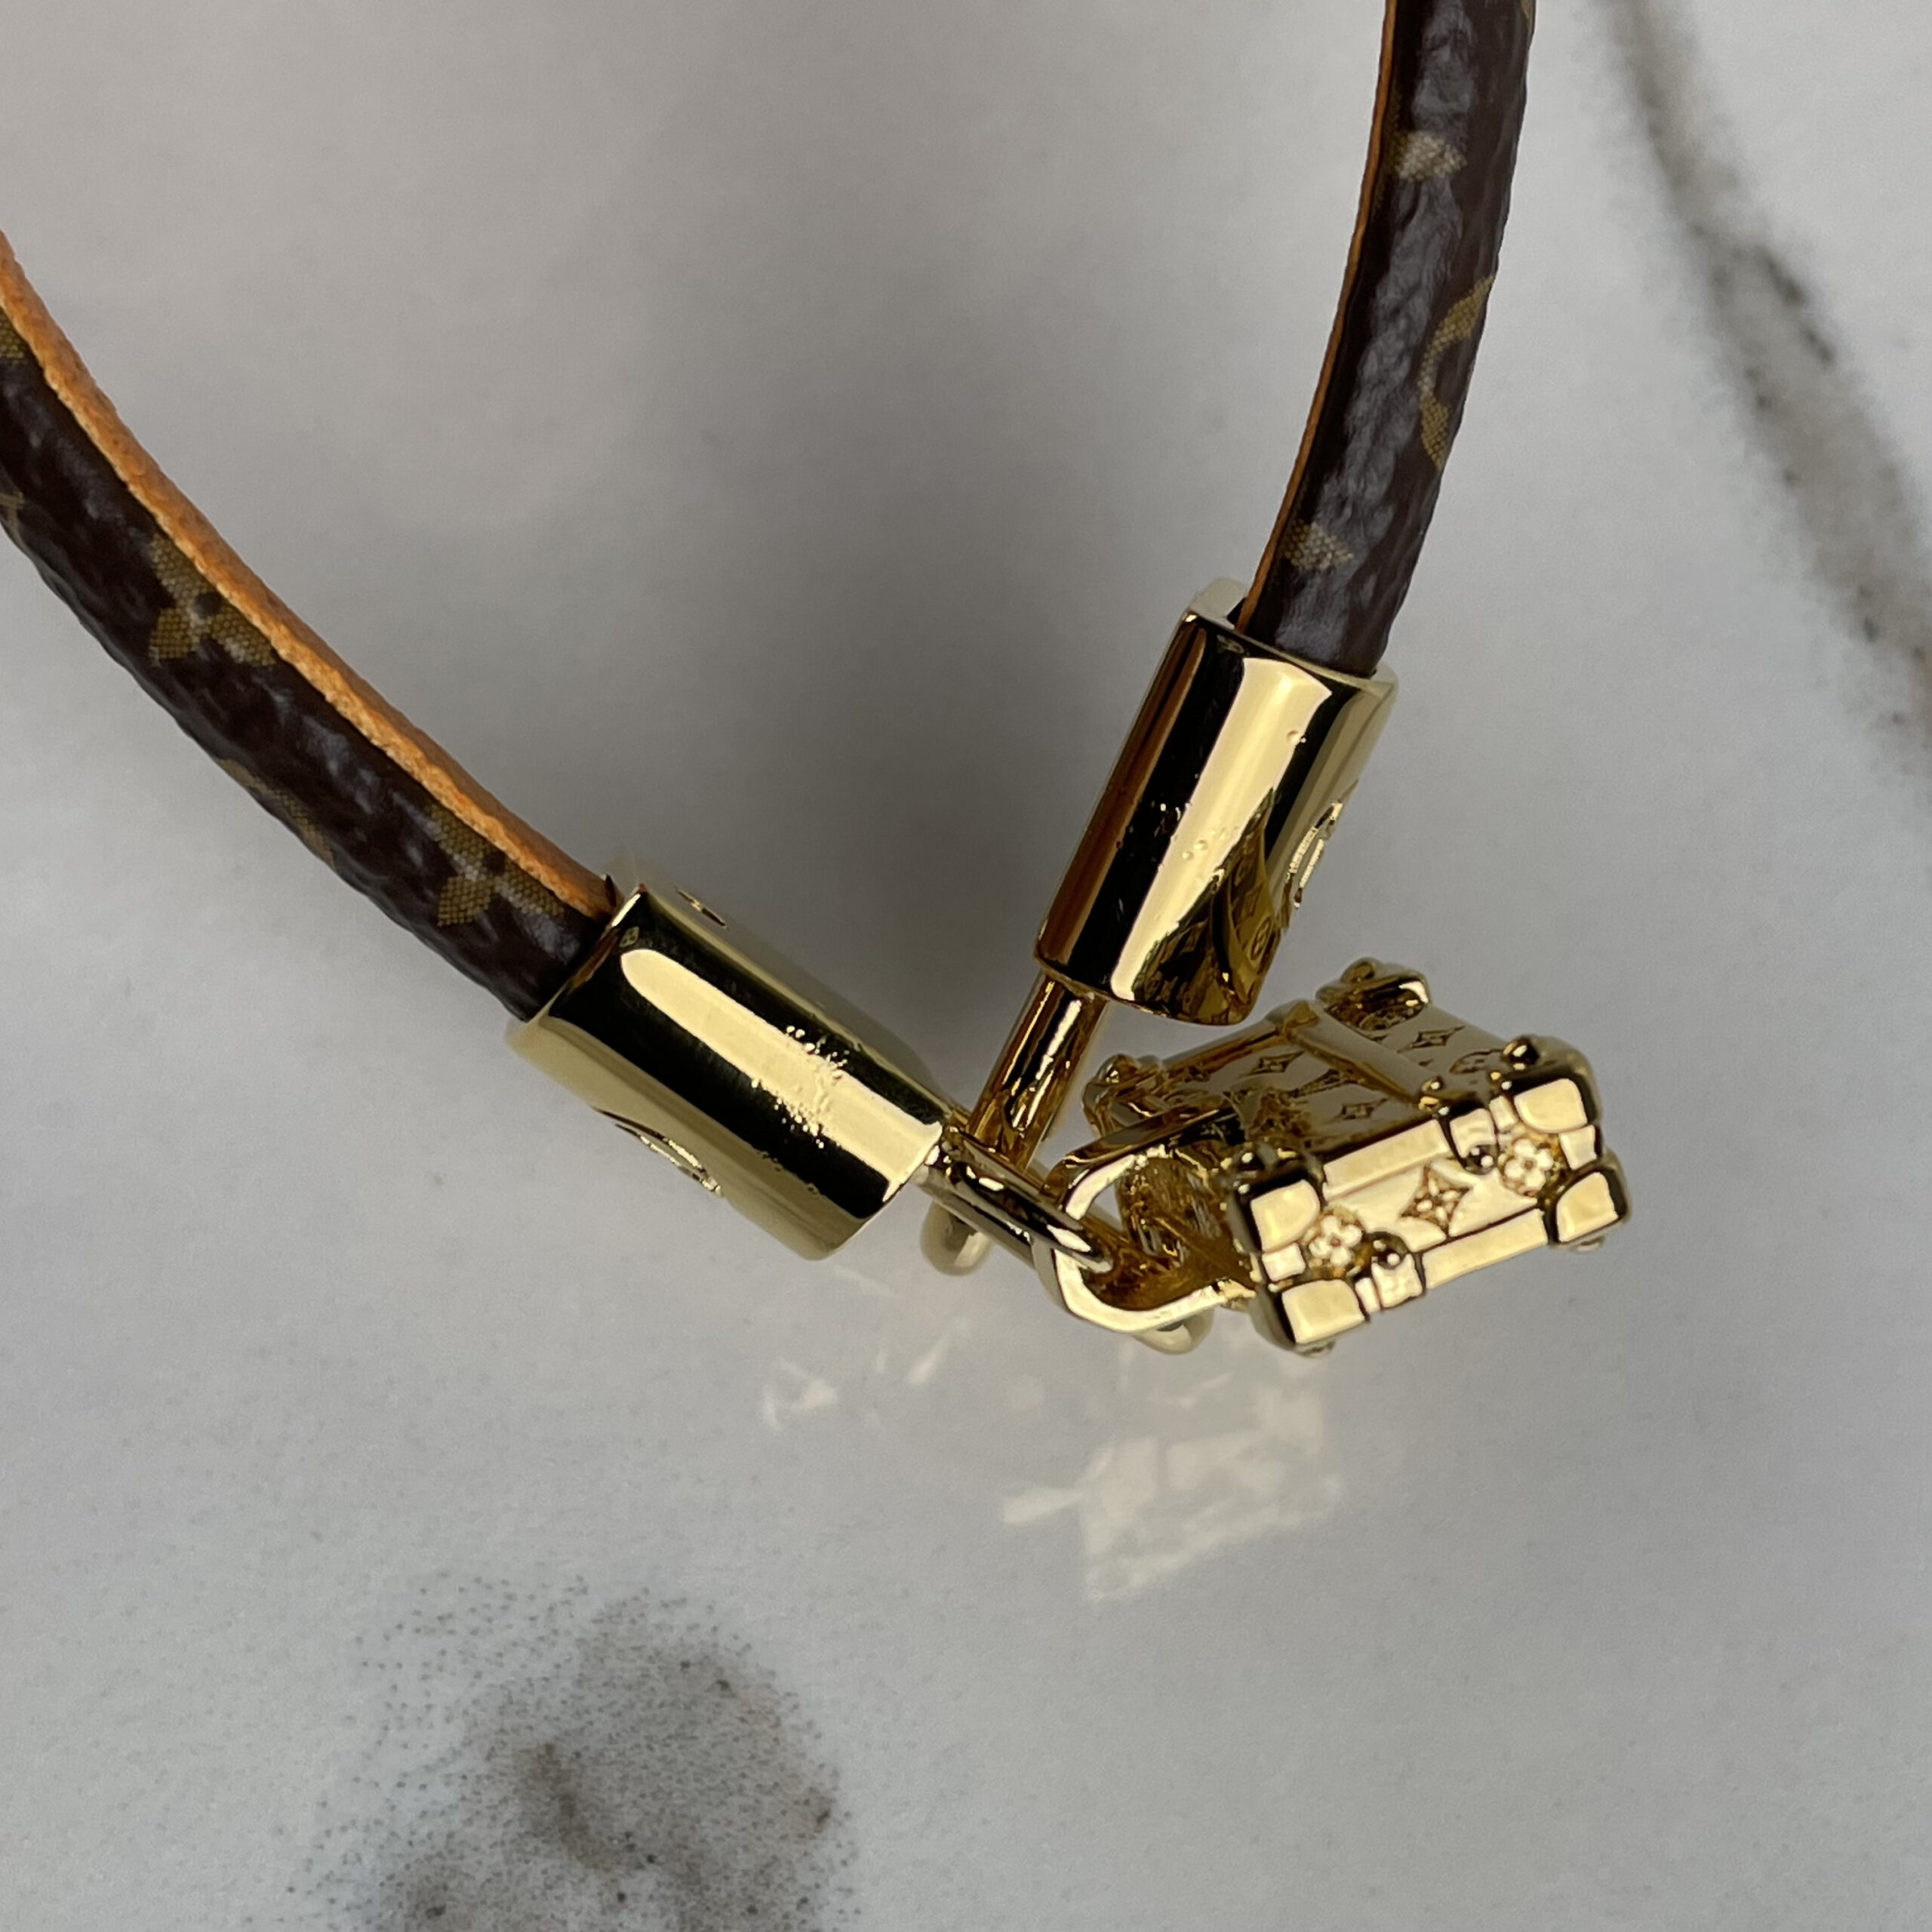 Louis Vuitton Monogram Metal Charm Bracelet